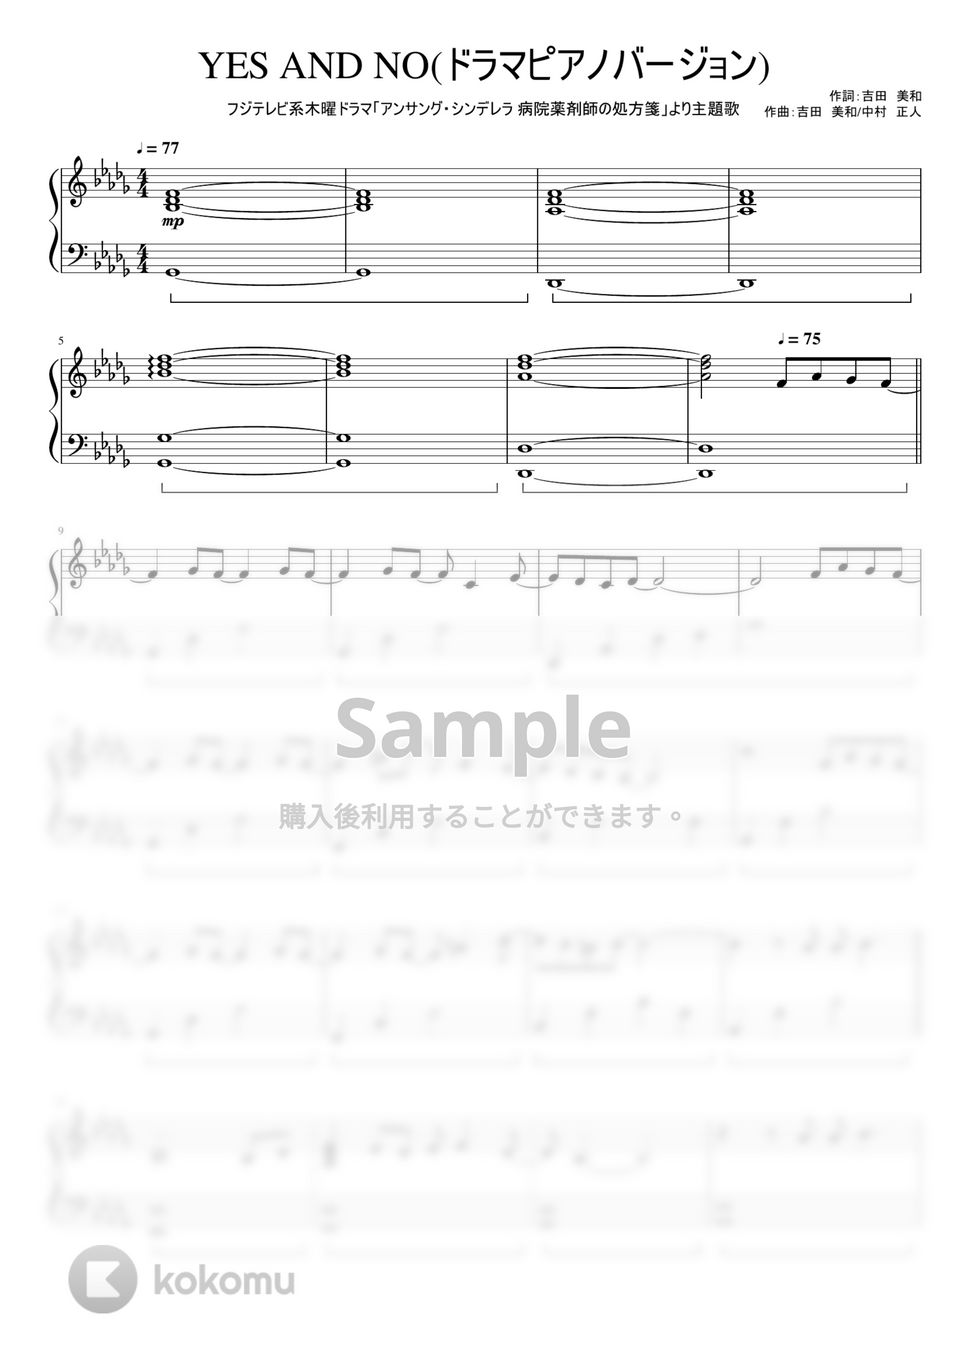 DREAMS COME TRUE - YES AND NO (ドラマピアノバージョン) by ちゃんRINA。